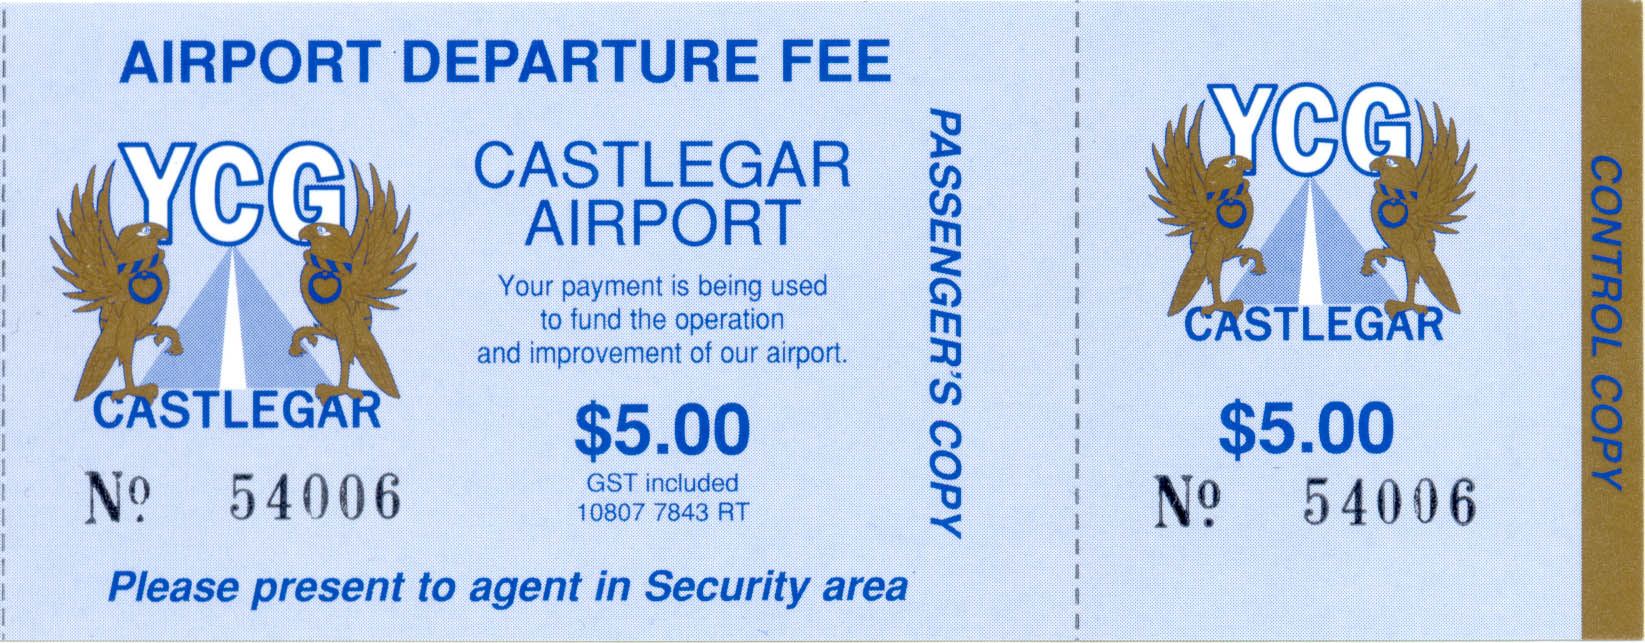 Airport Departure Fee Ticket - Castlegar Airport